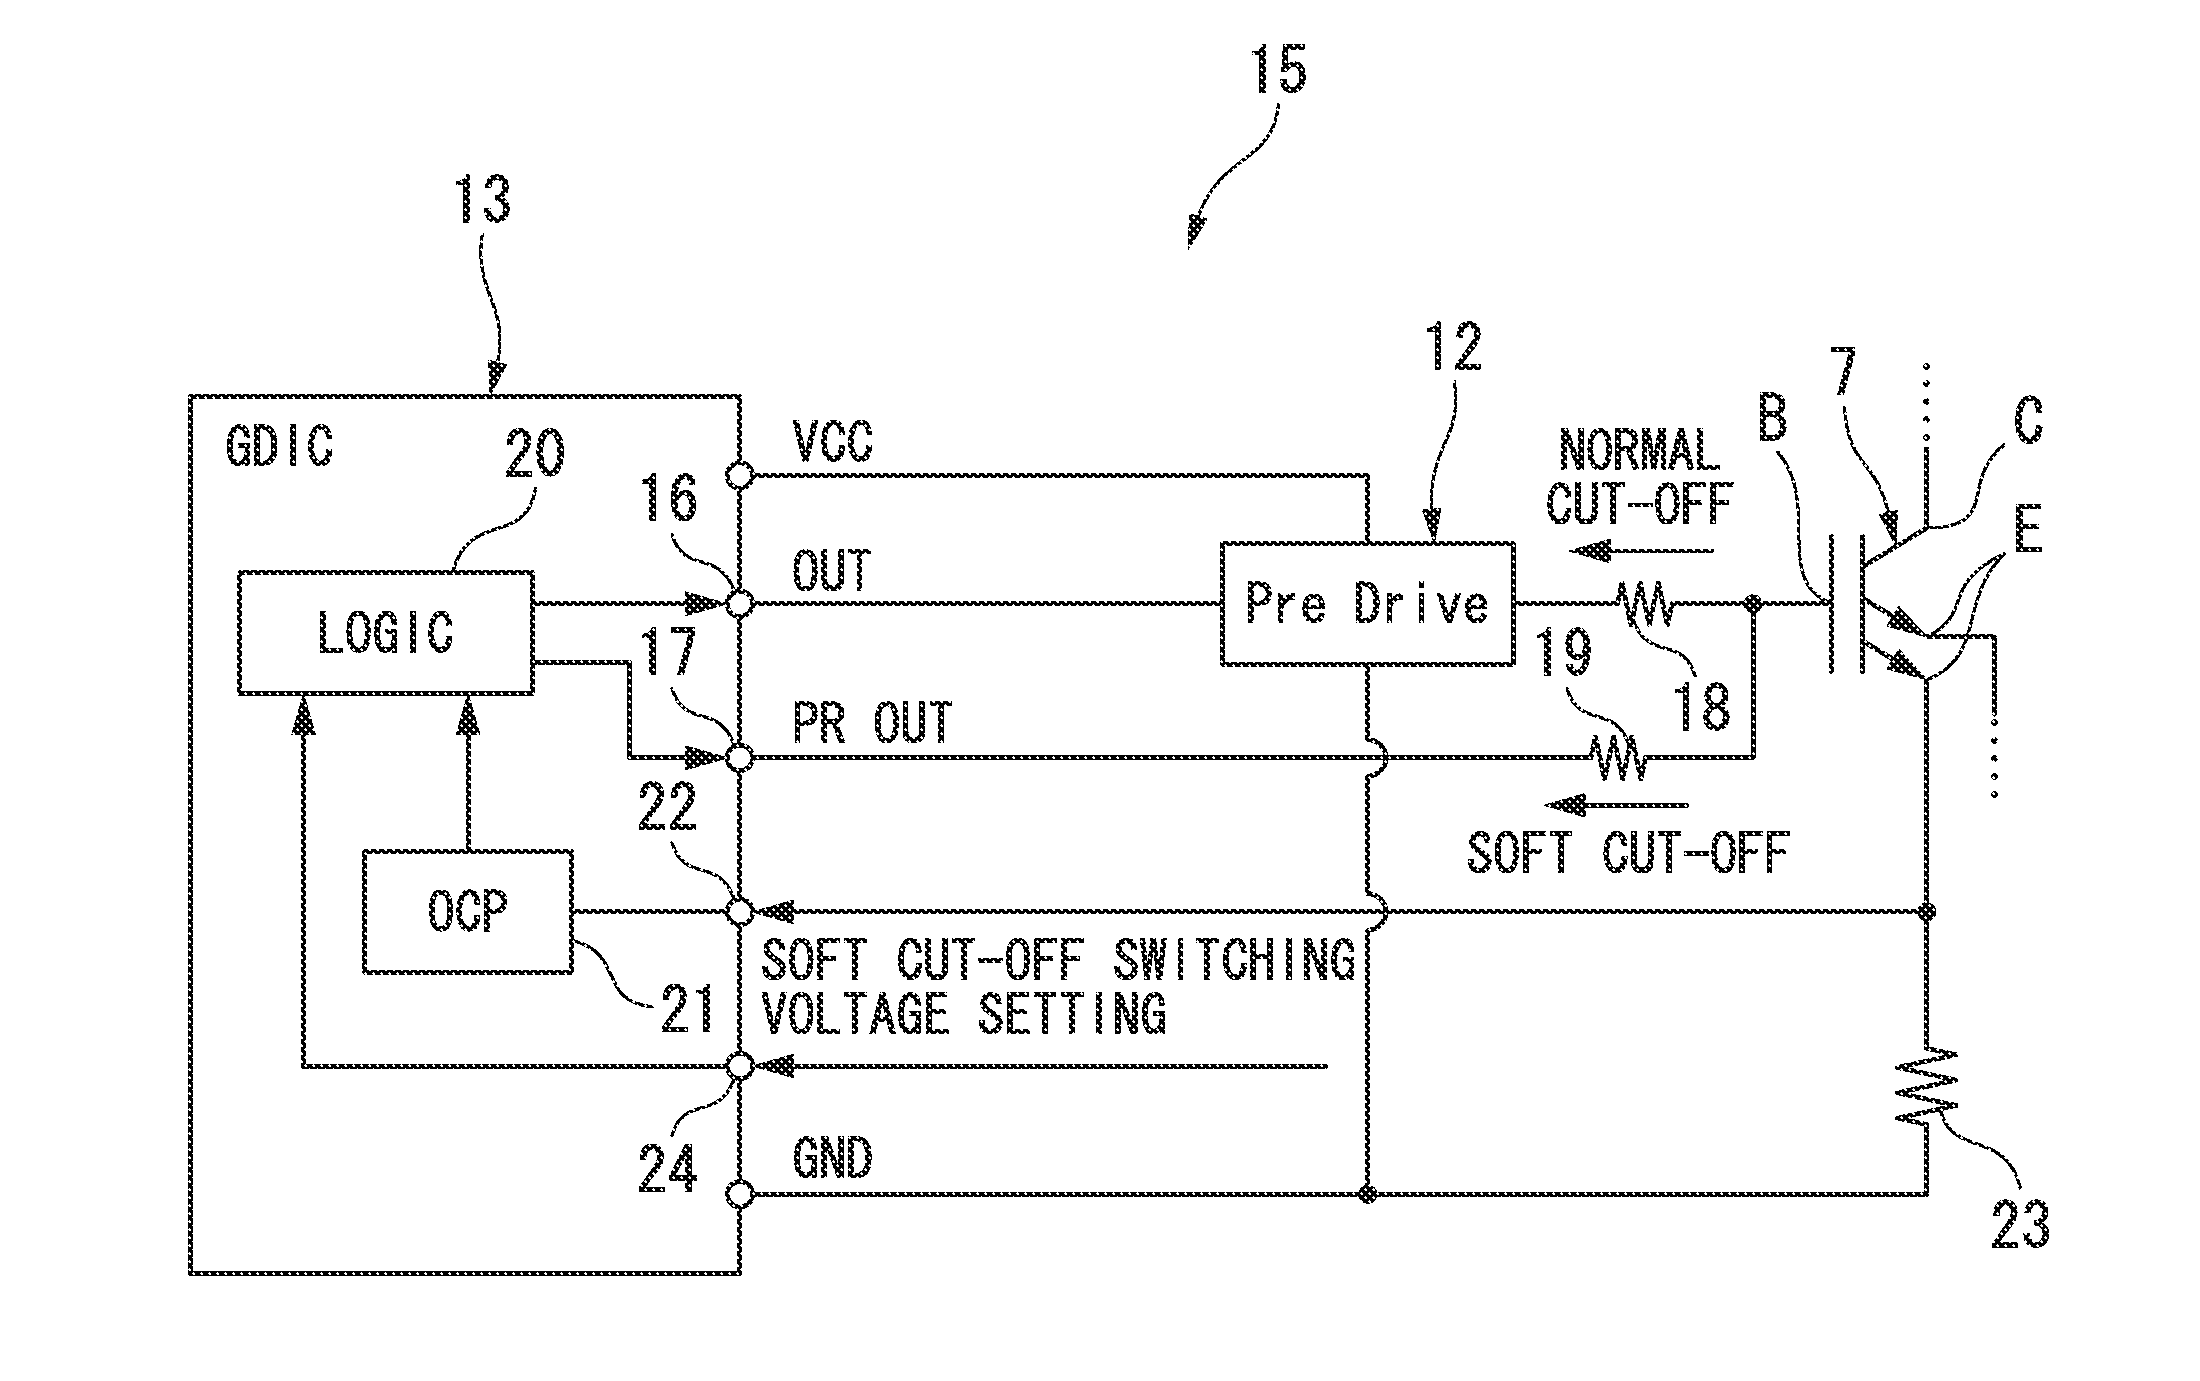 Short-circuit protection method